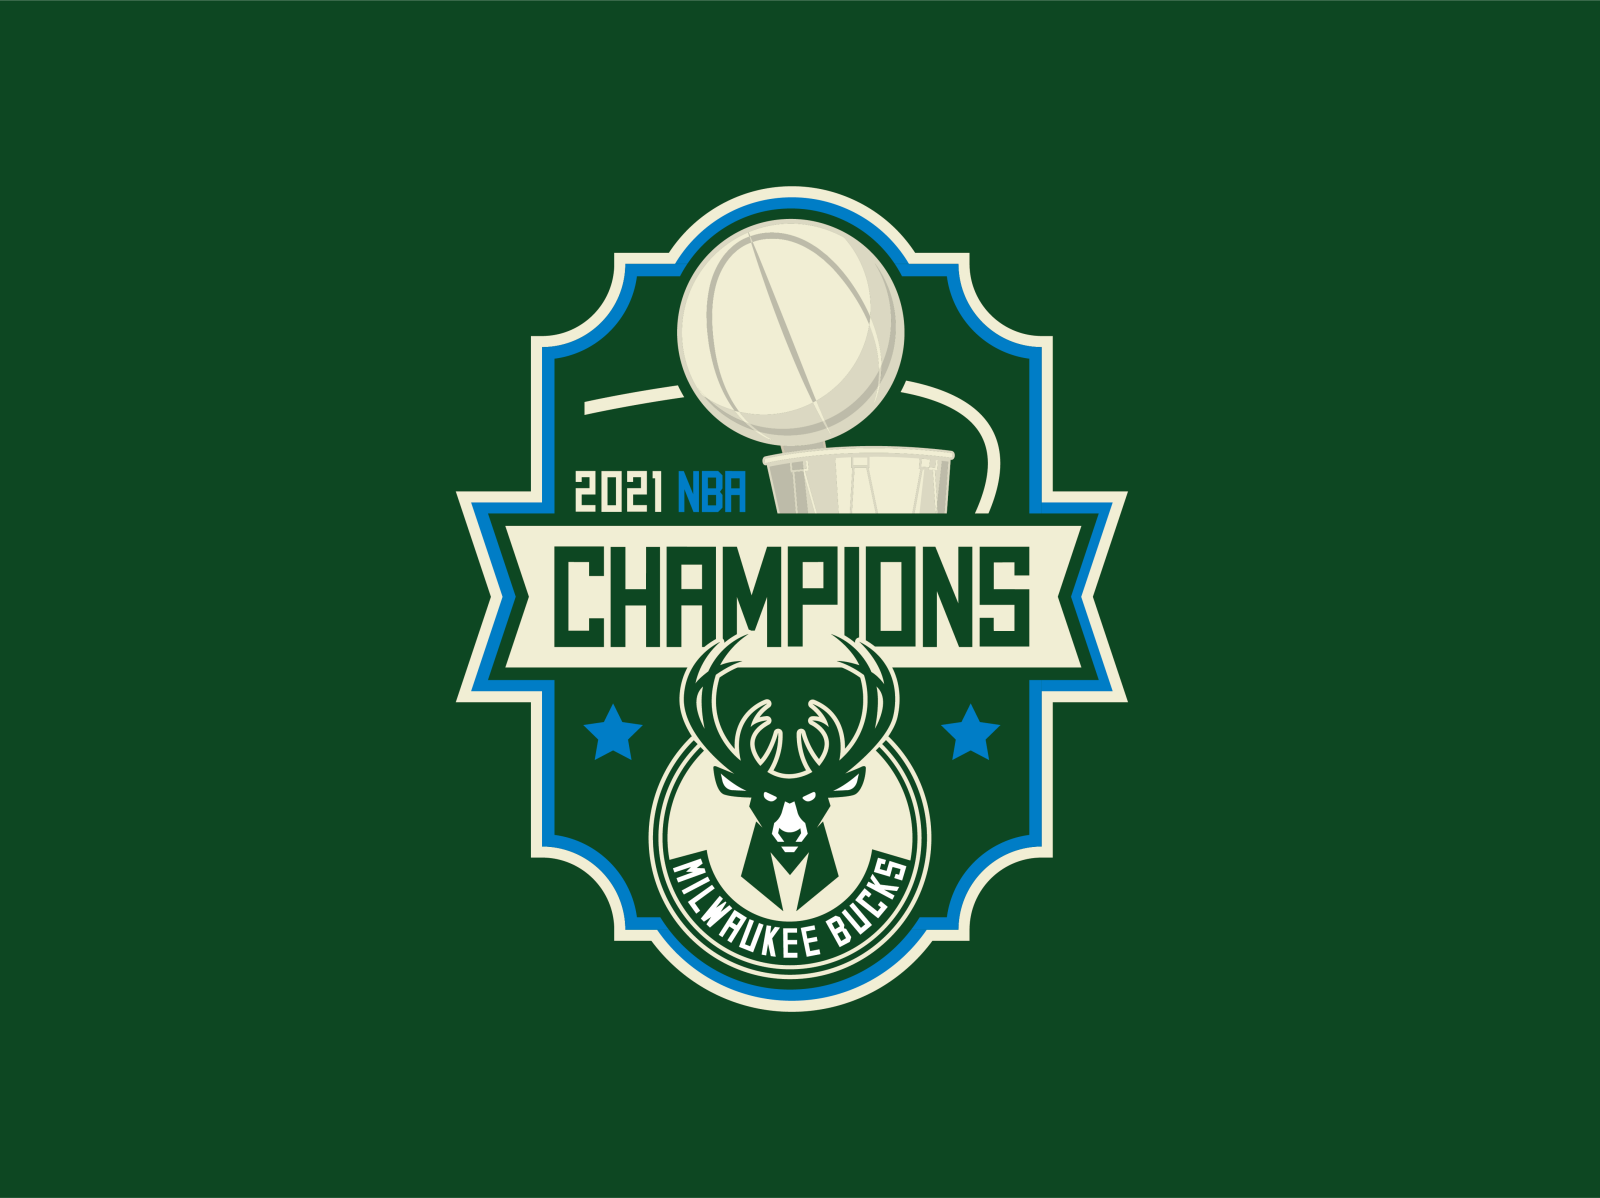 Milwaukee Bucks 2021 NBA Champions Logo by Sam Behrmann on Dribbble